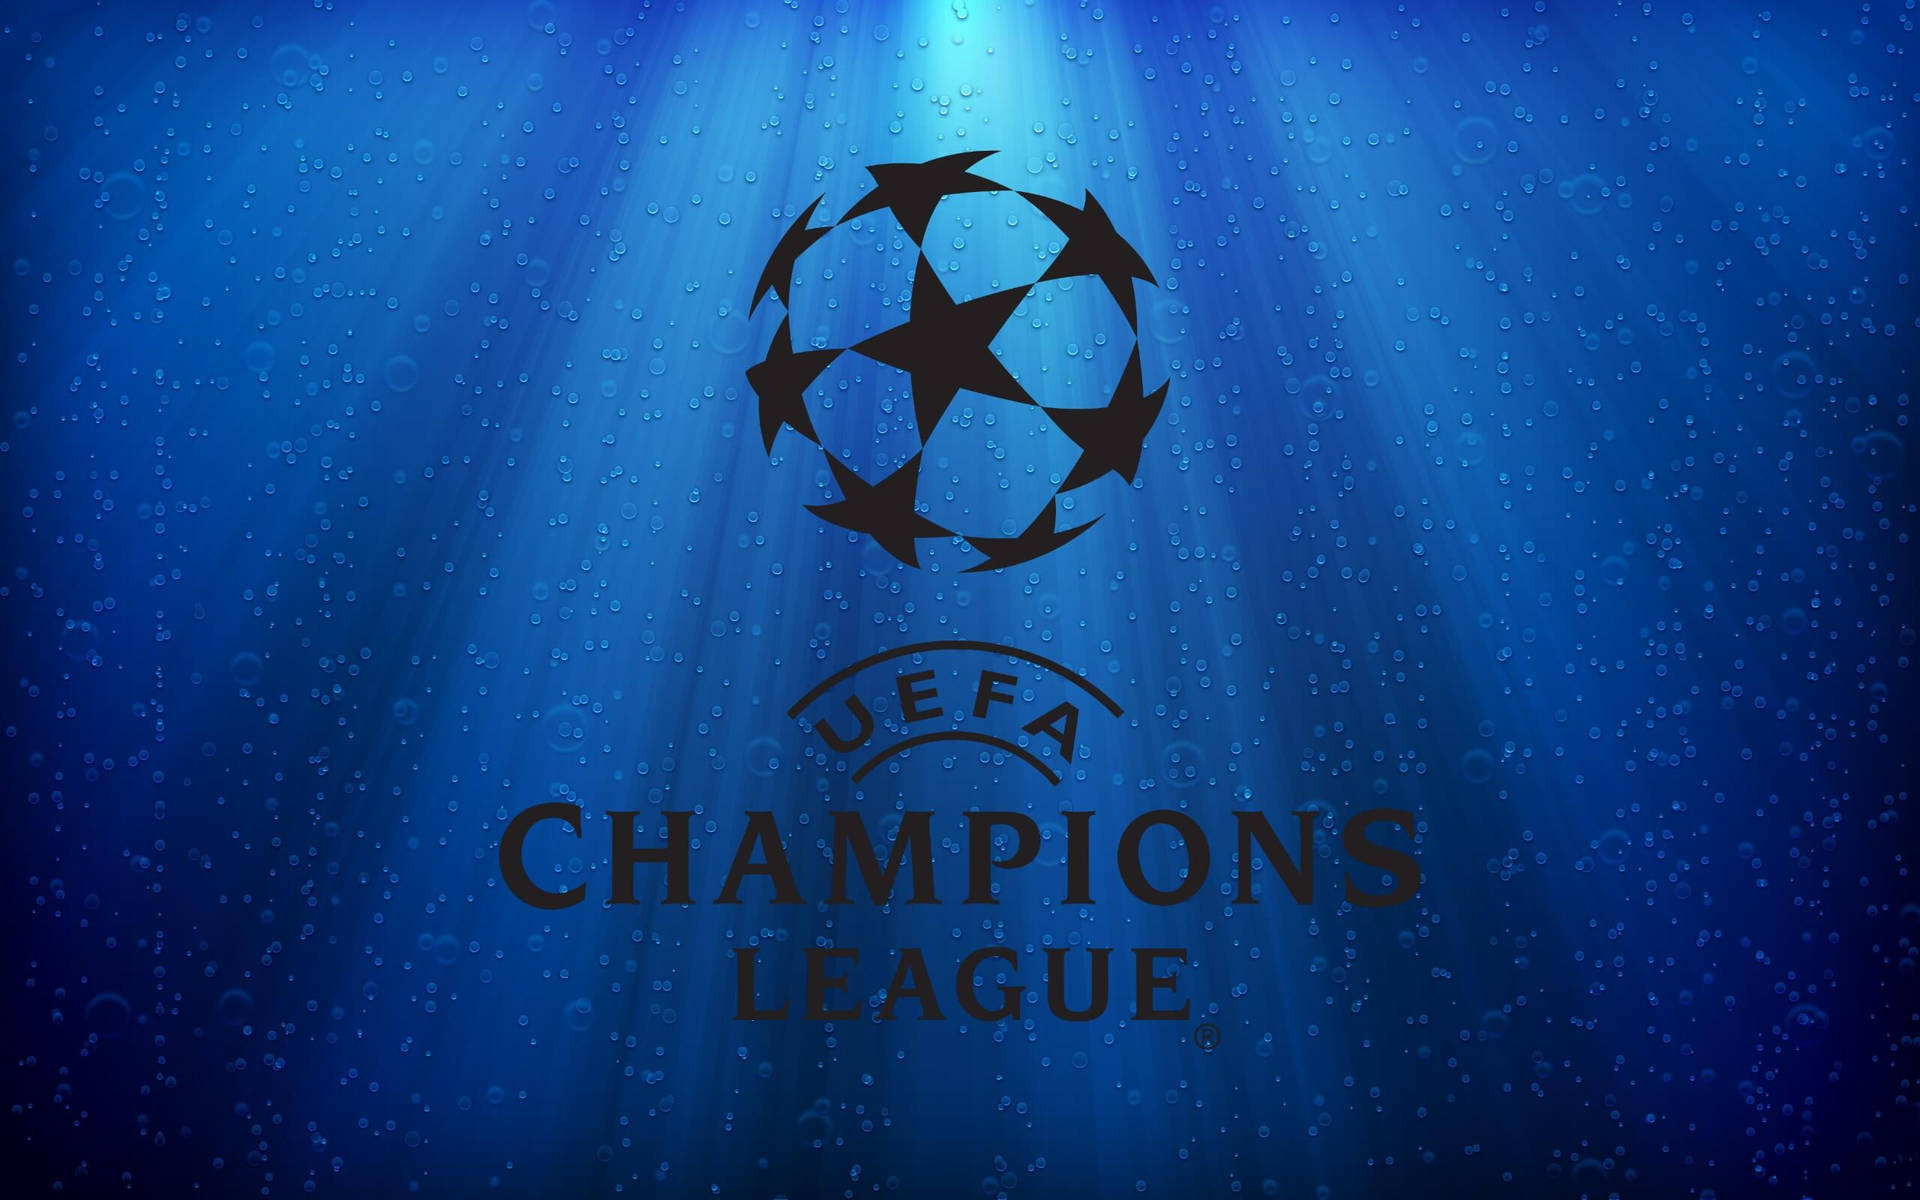 Uefa Champions League In Blue Rain Drop Background